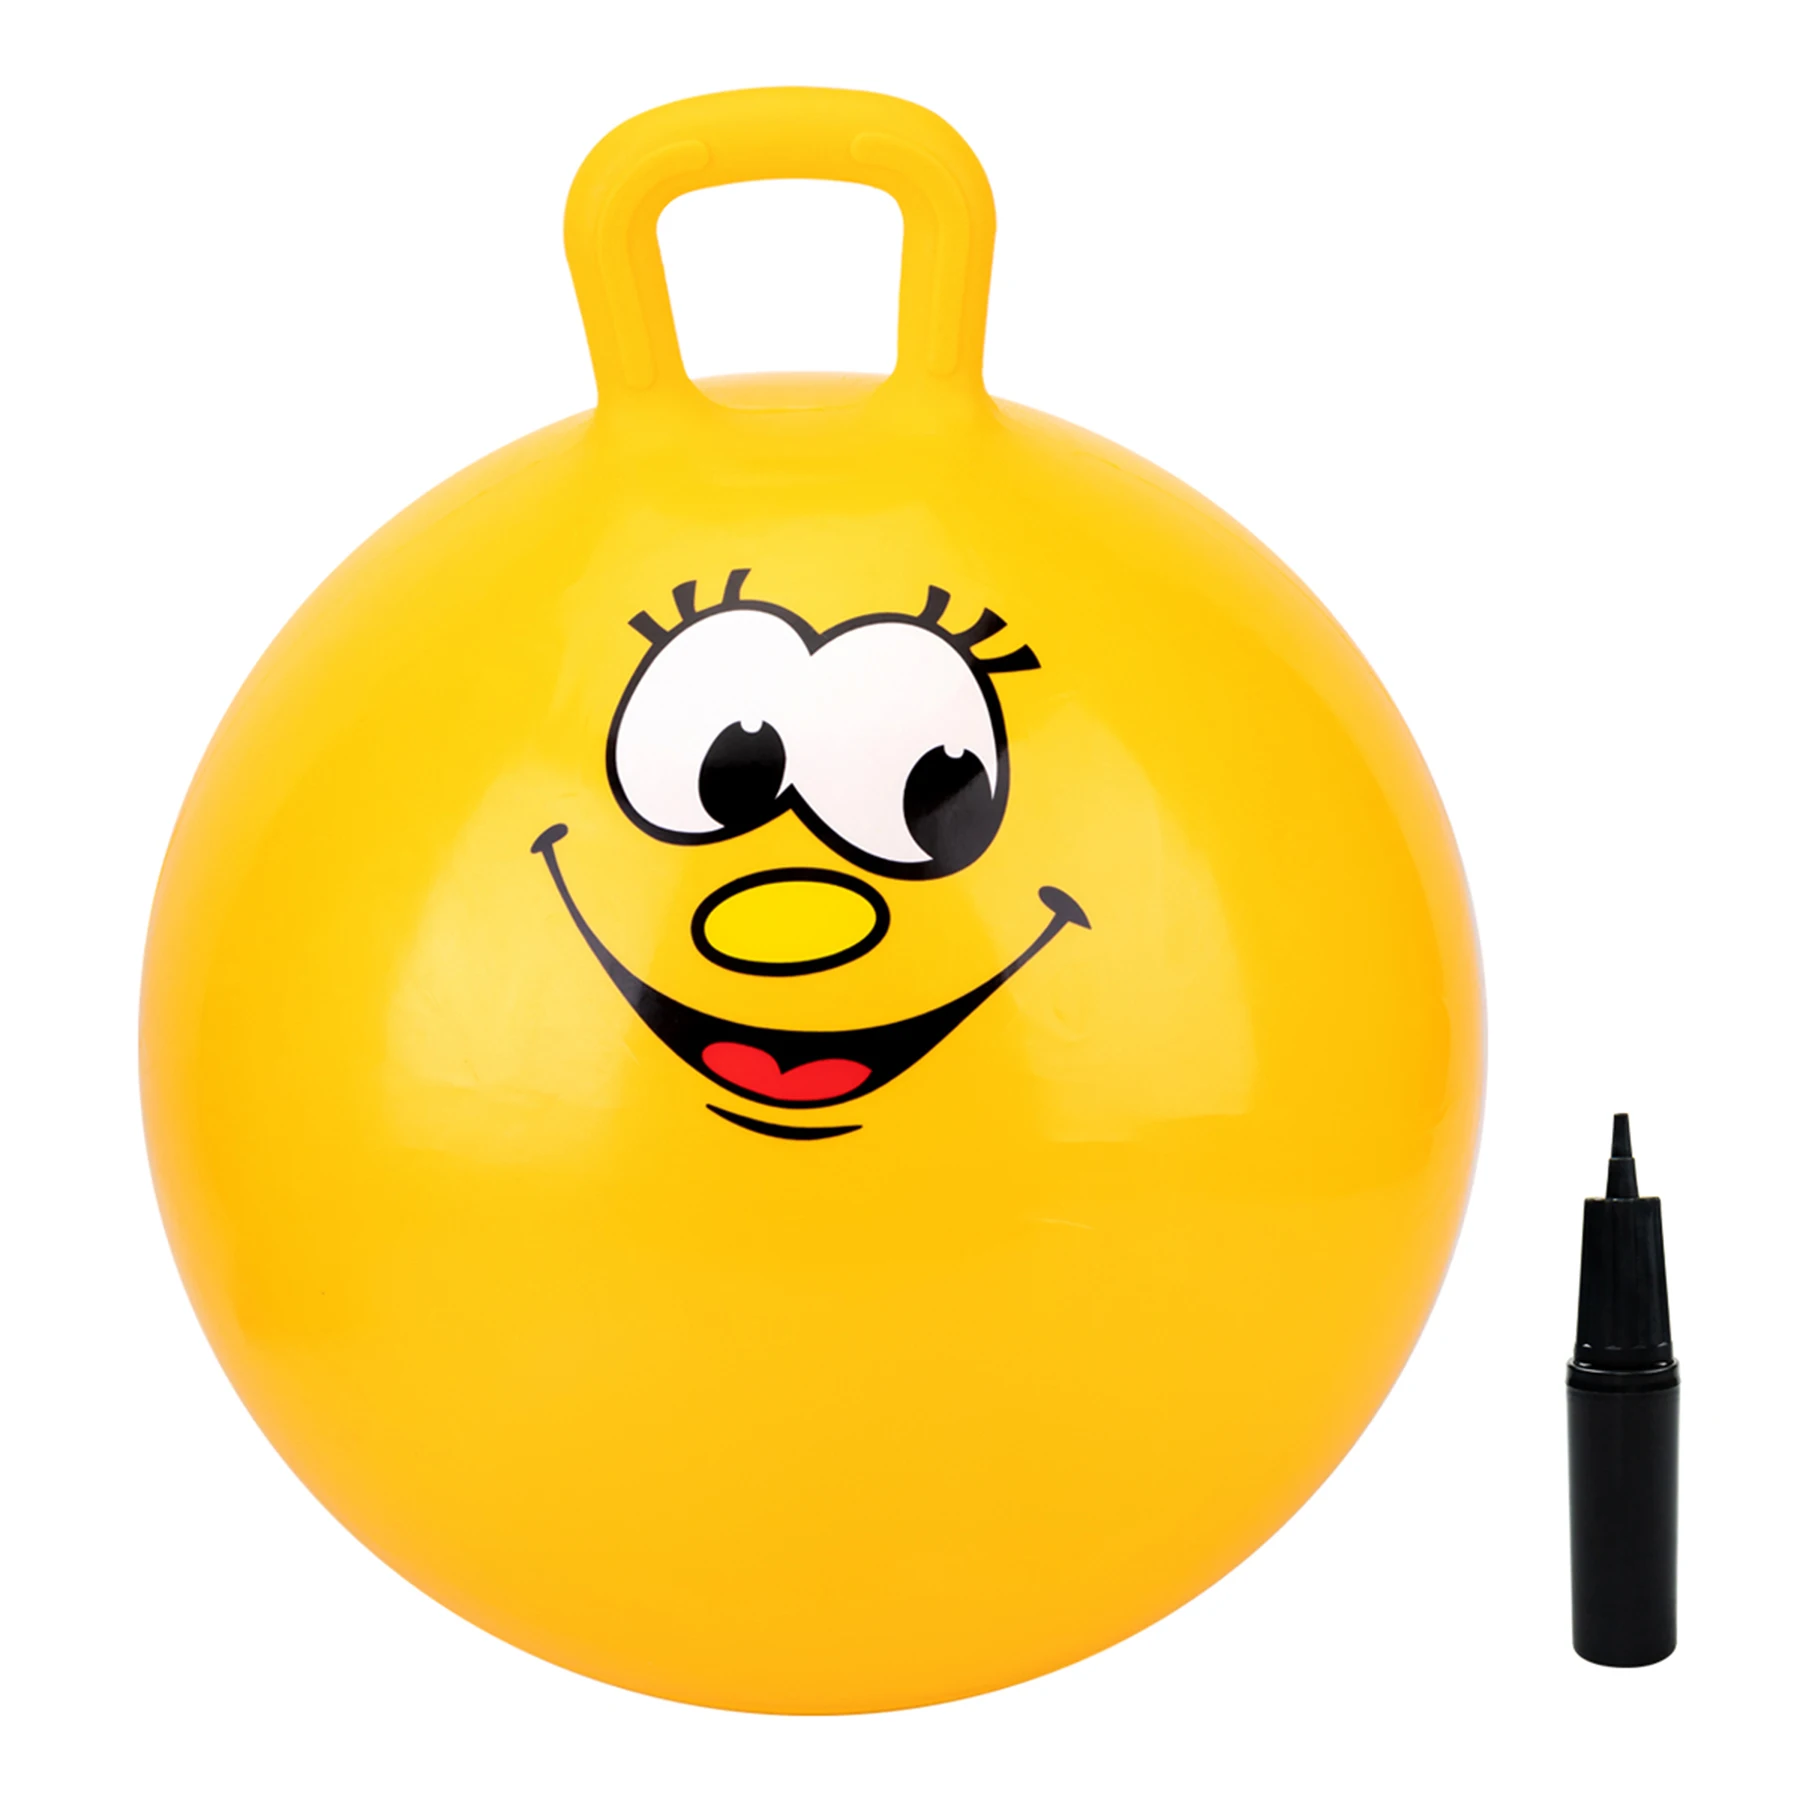 

2023 New Factory Direct Jumping Hopper Ball for children Yellow color rubber bouncy ball jumping ball